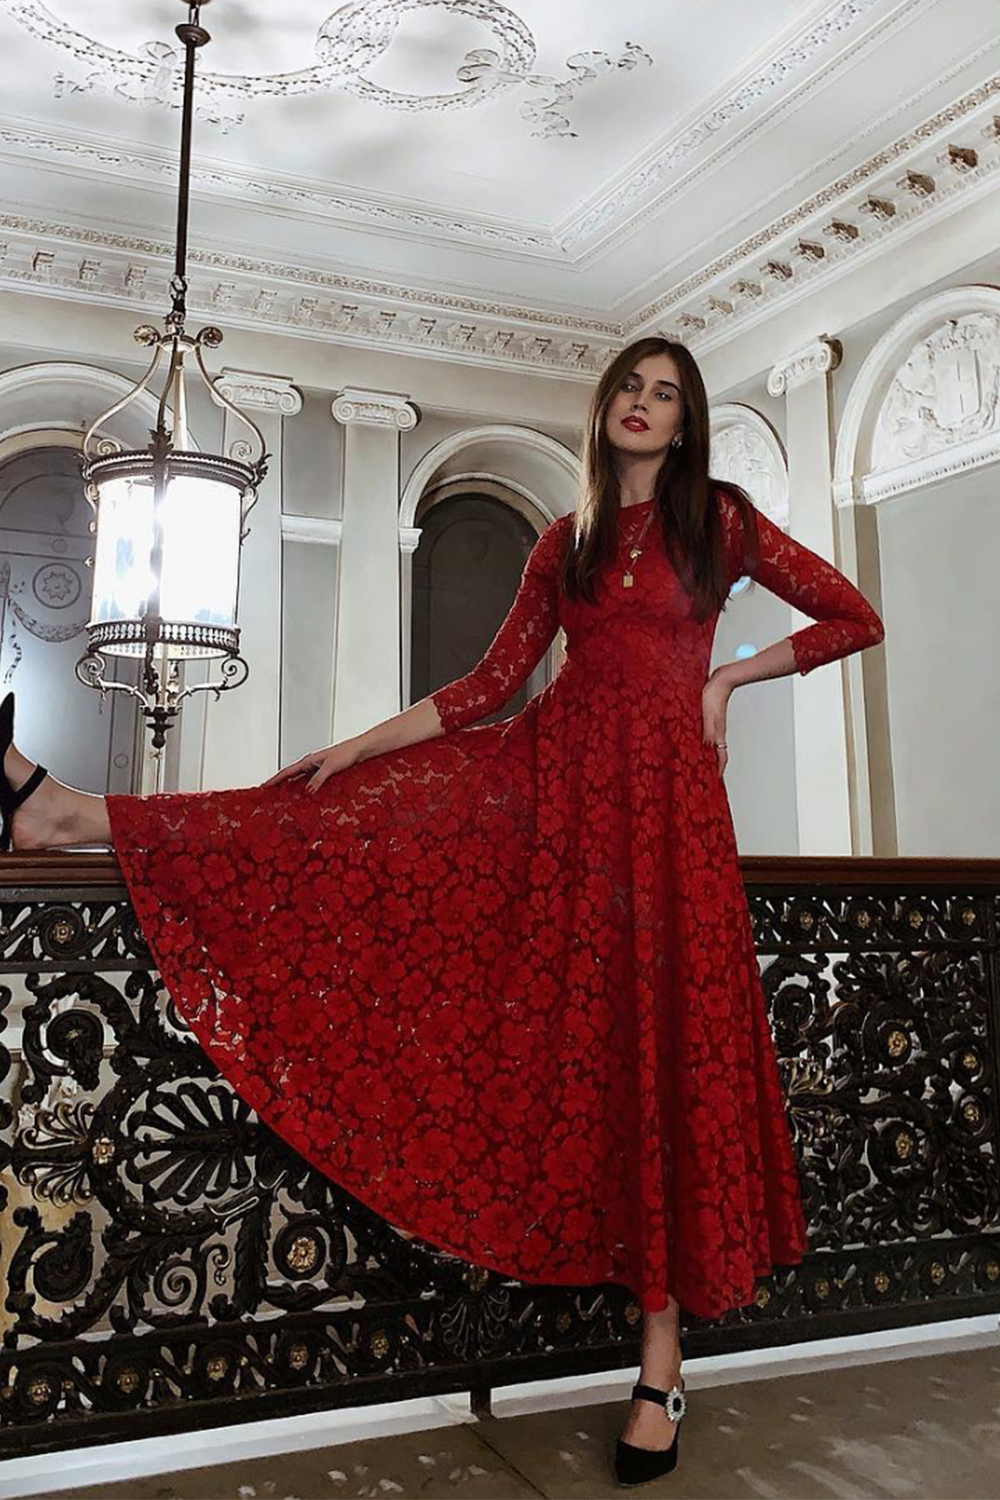 Best New Year's Eve Dresses: Darja Barranick in red dress